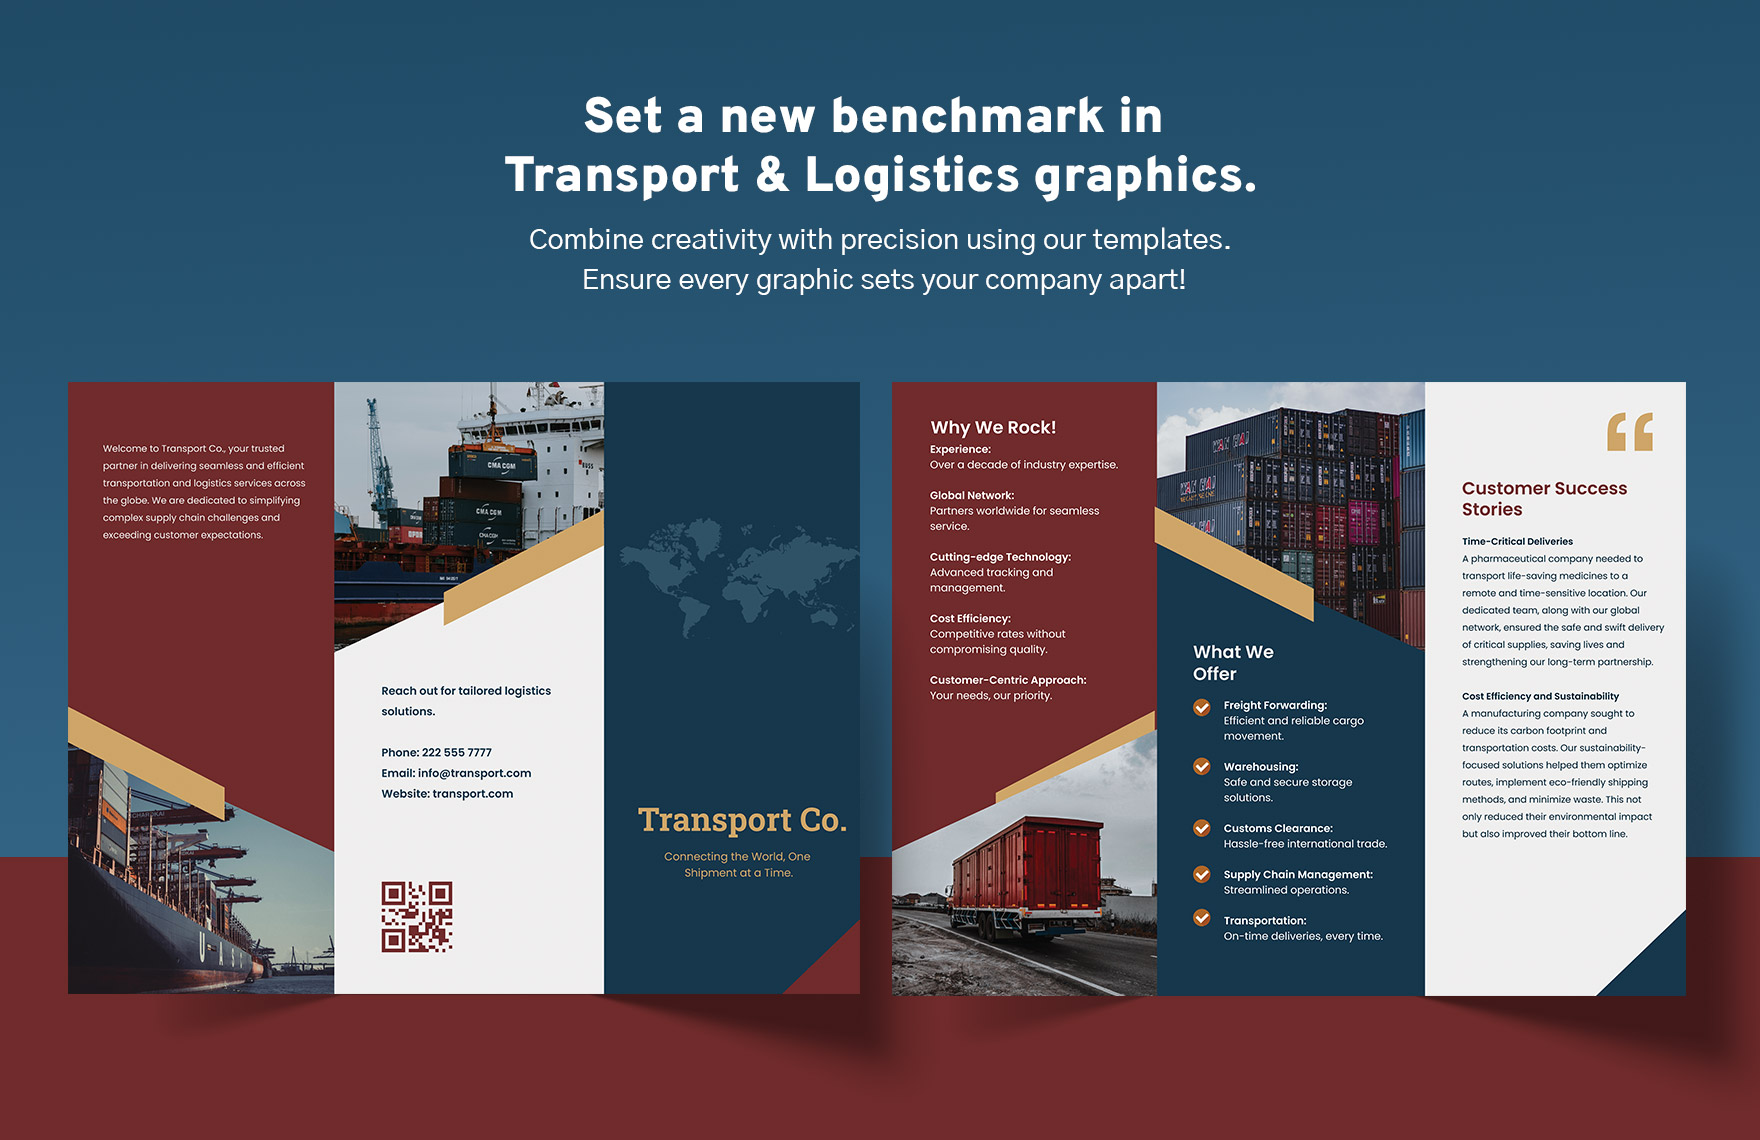 Transport and Logistics Global Logistics Solutions Brochure Template